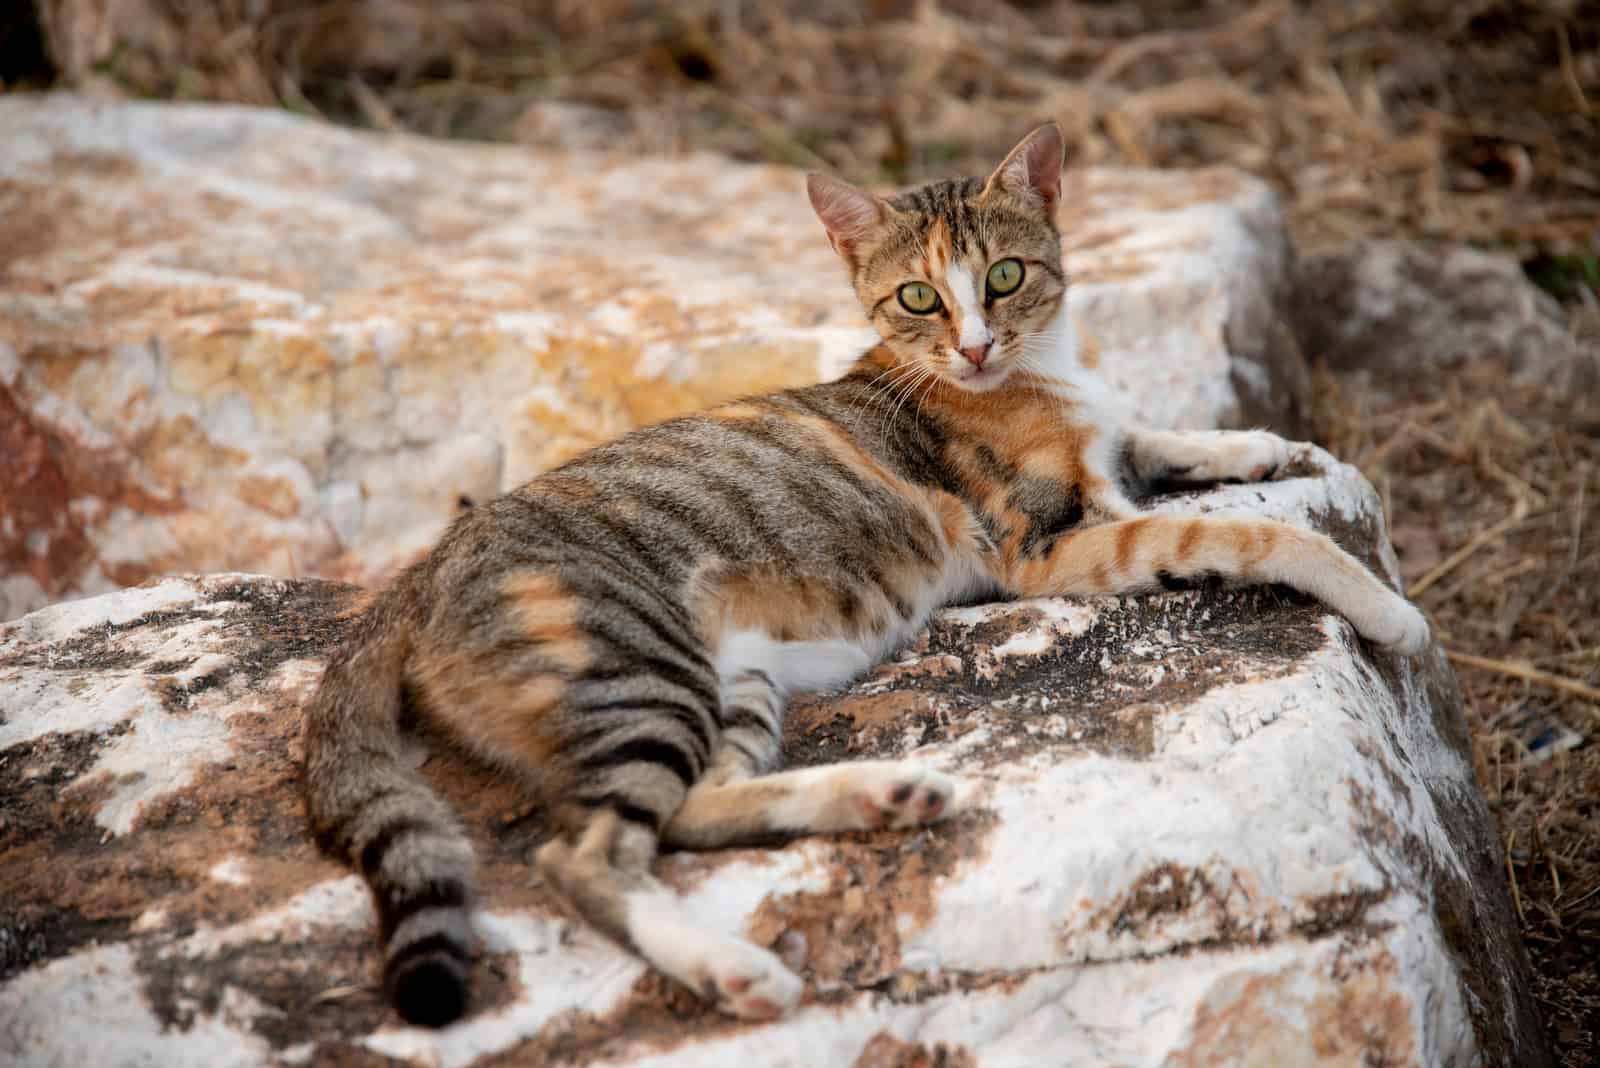 A sokoke cat lying on the rocks